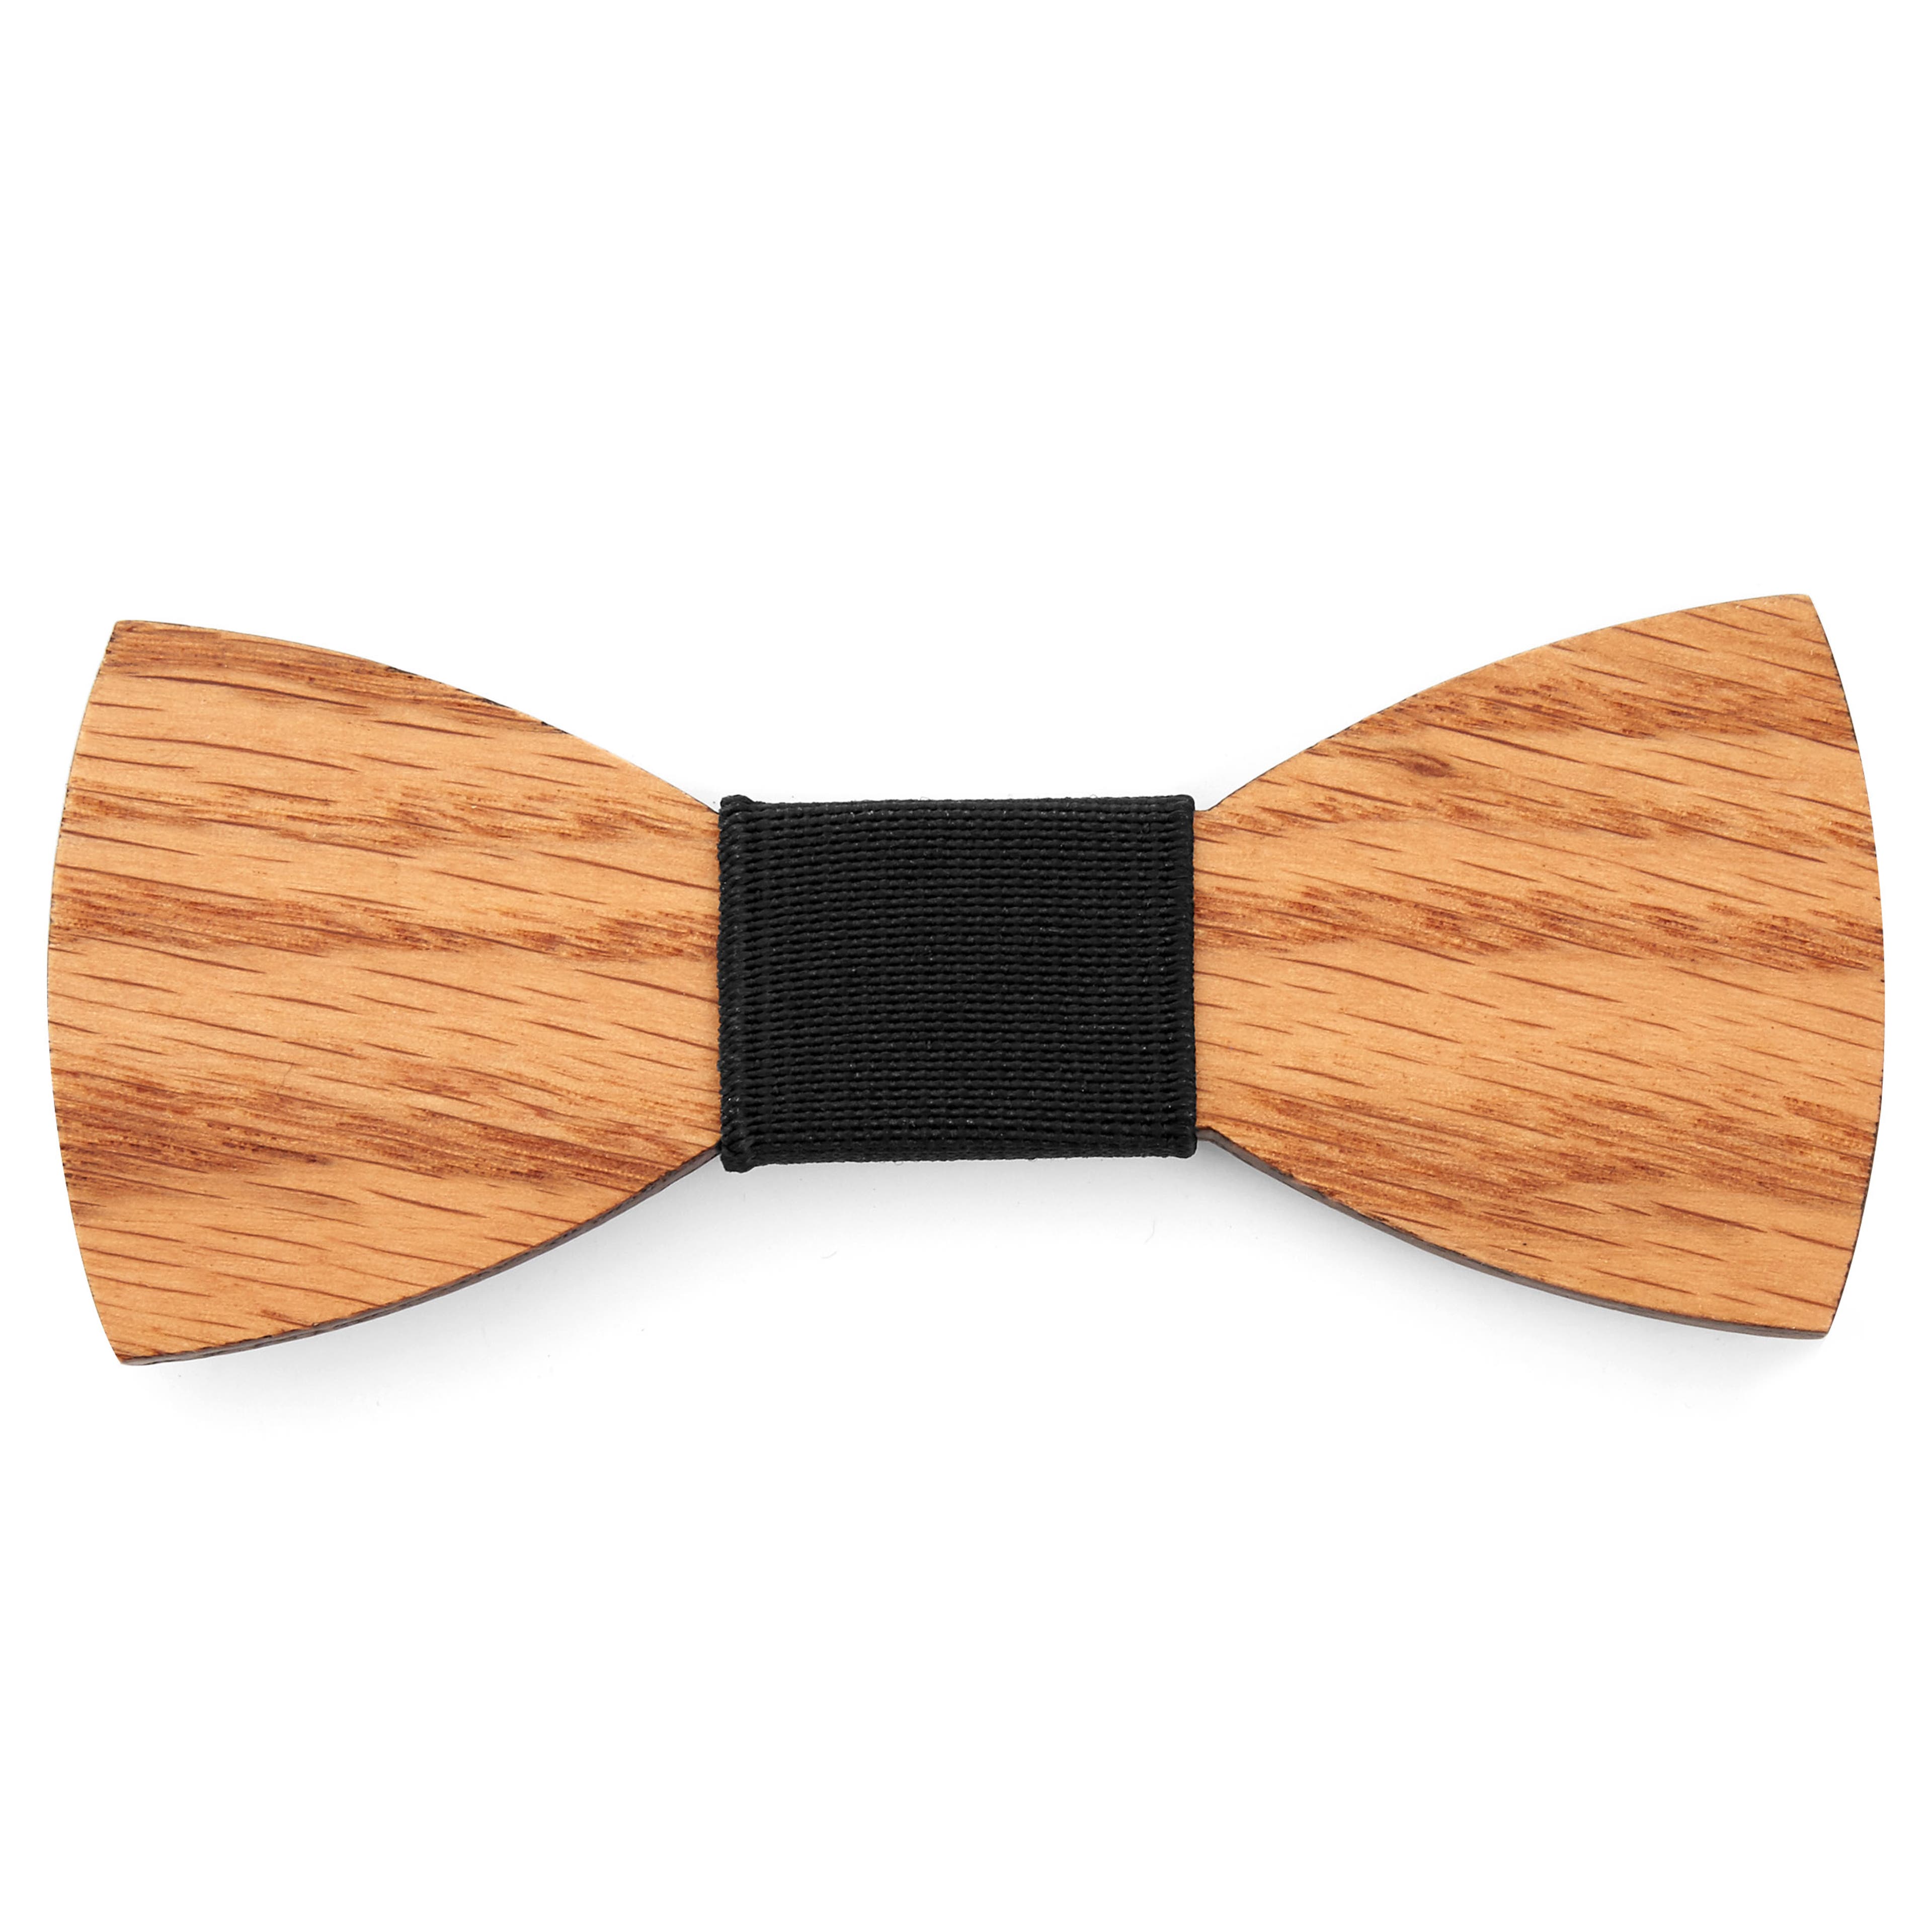 Oak Bow Tie With Black Cloth Centerpiece